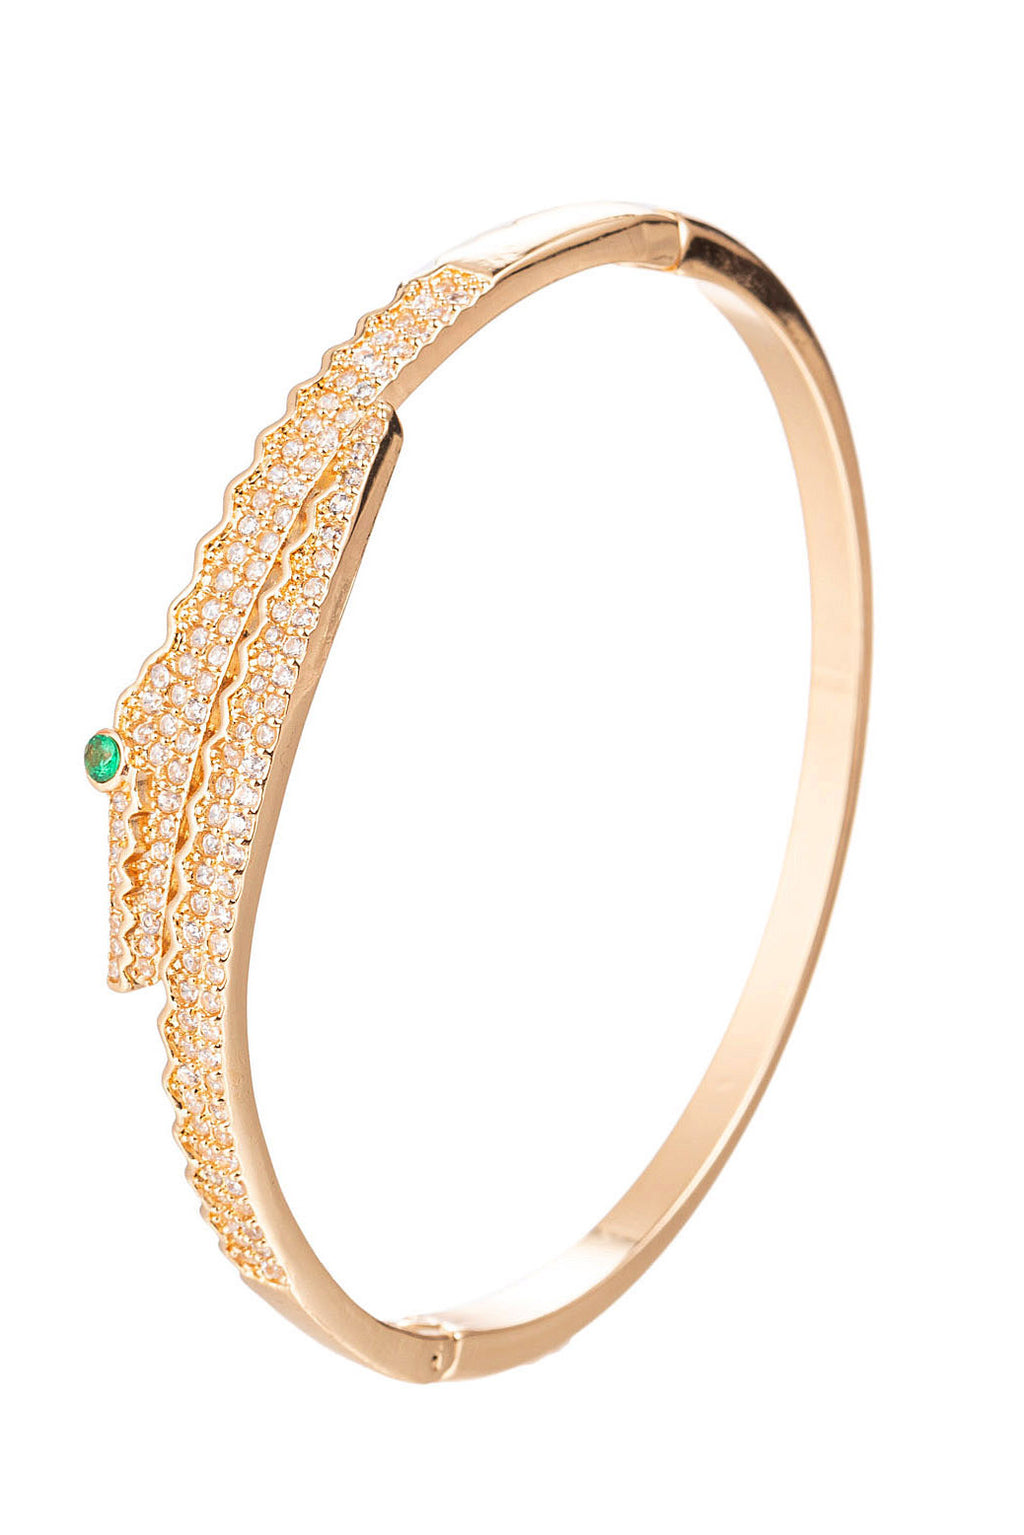 Gold titanium cuff bracelet studded with CZ crystals.